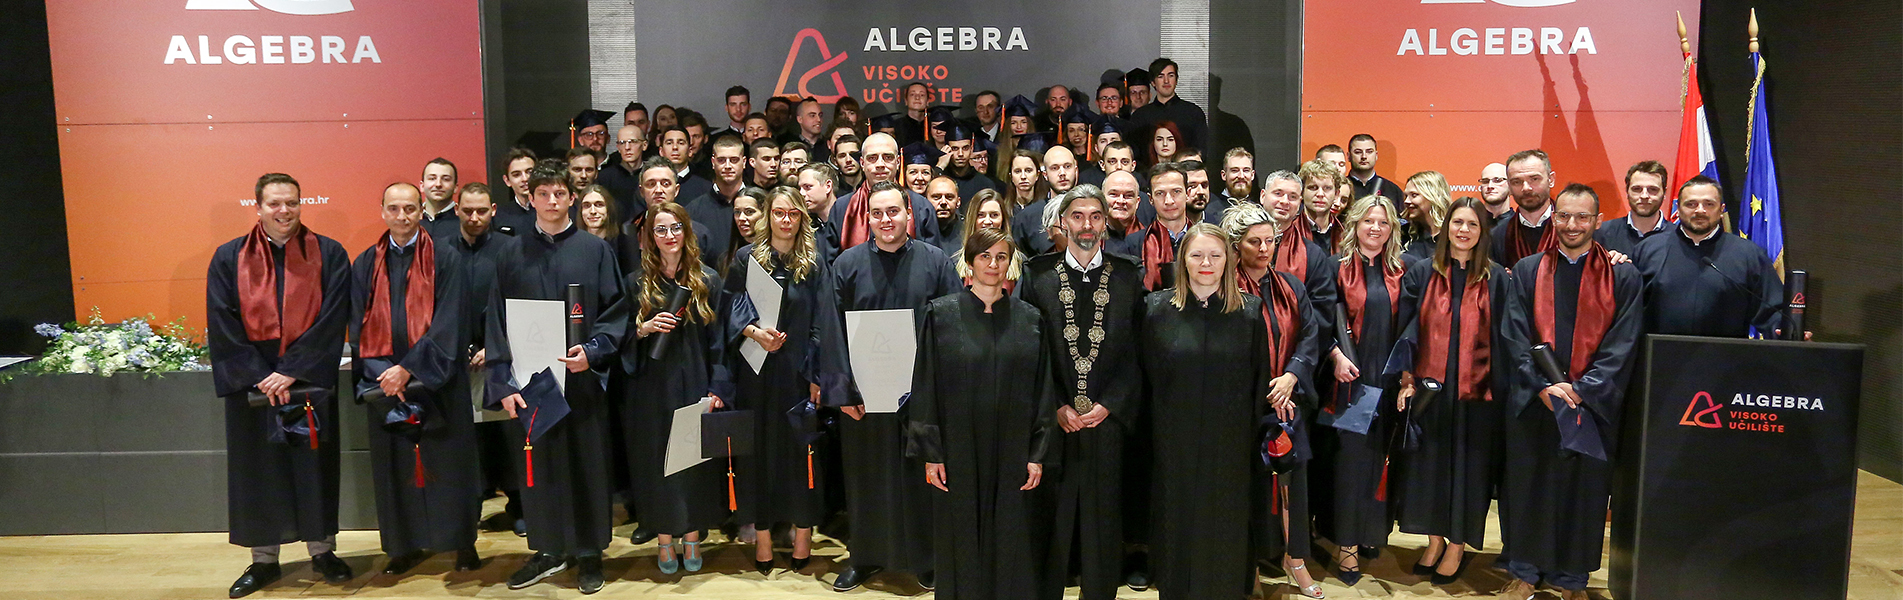 Image for Graduation ceremony at Algebra University College